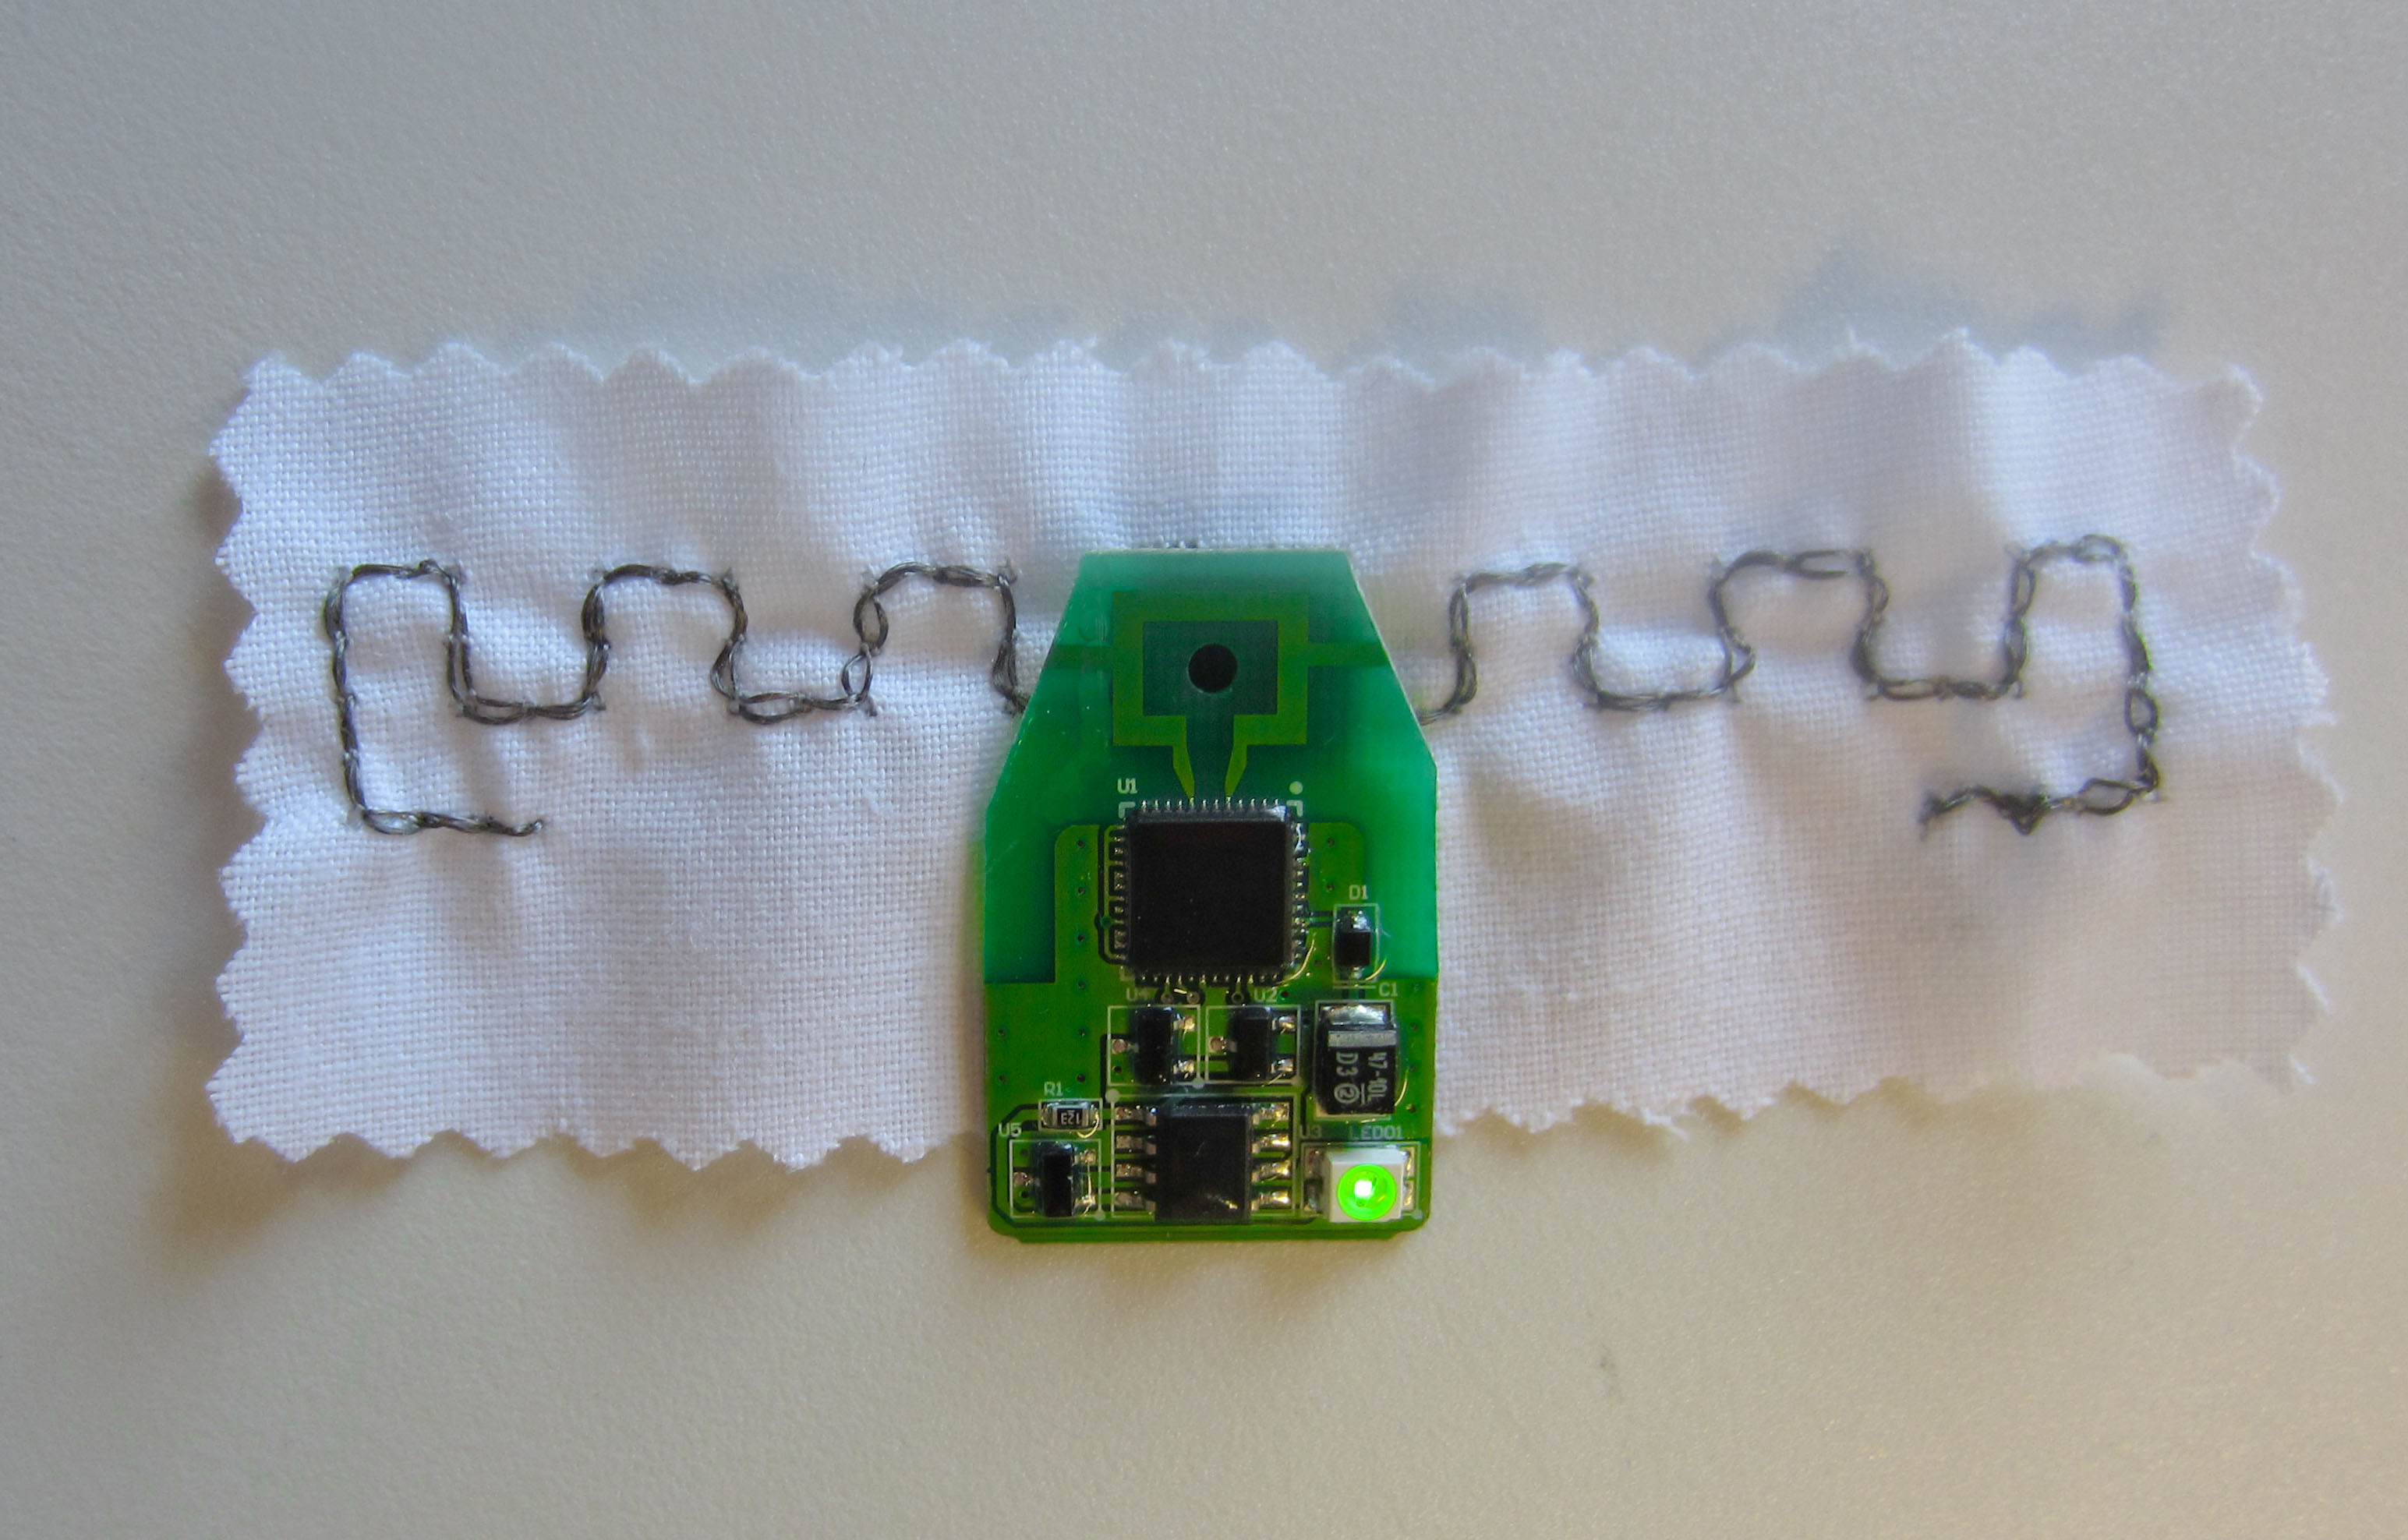 AITEX energy harvesting technical textile with an embedded RFID sensor 2